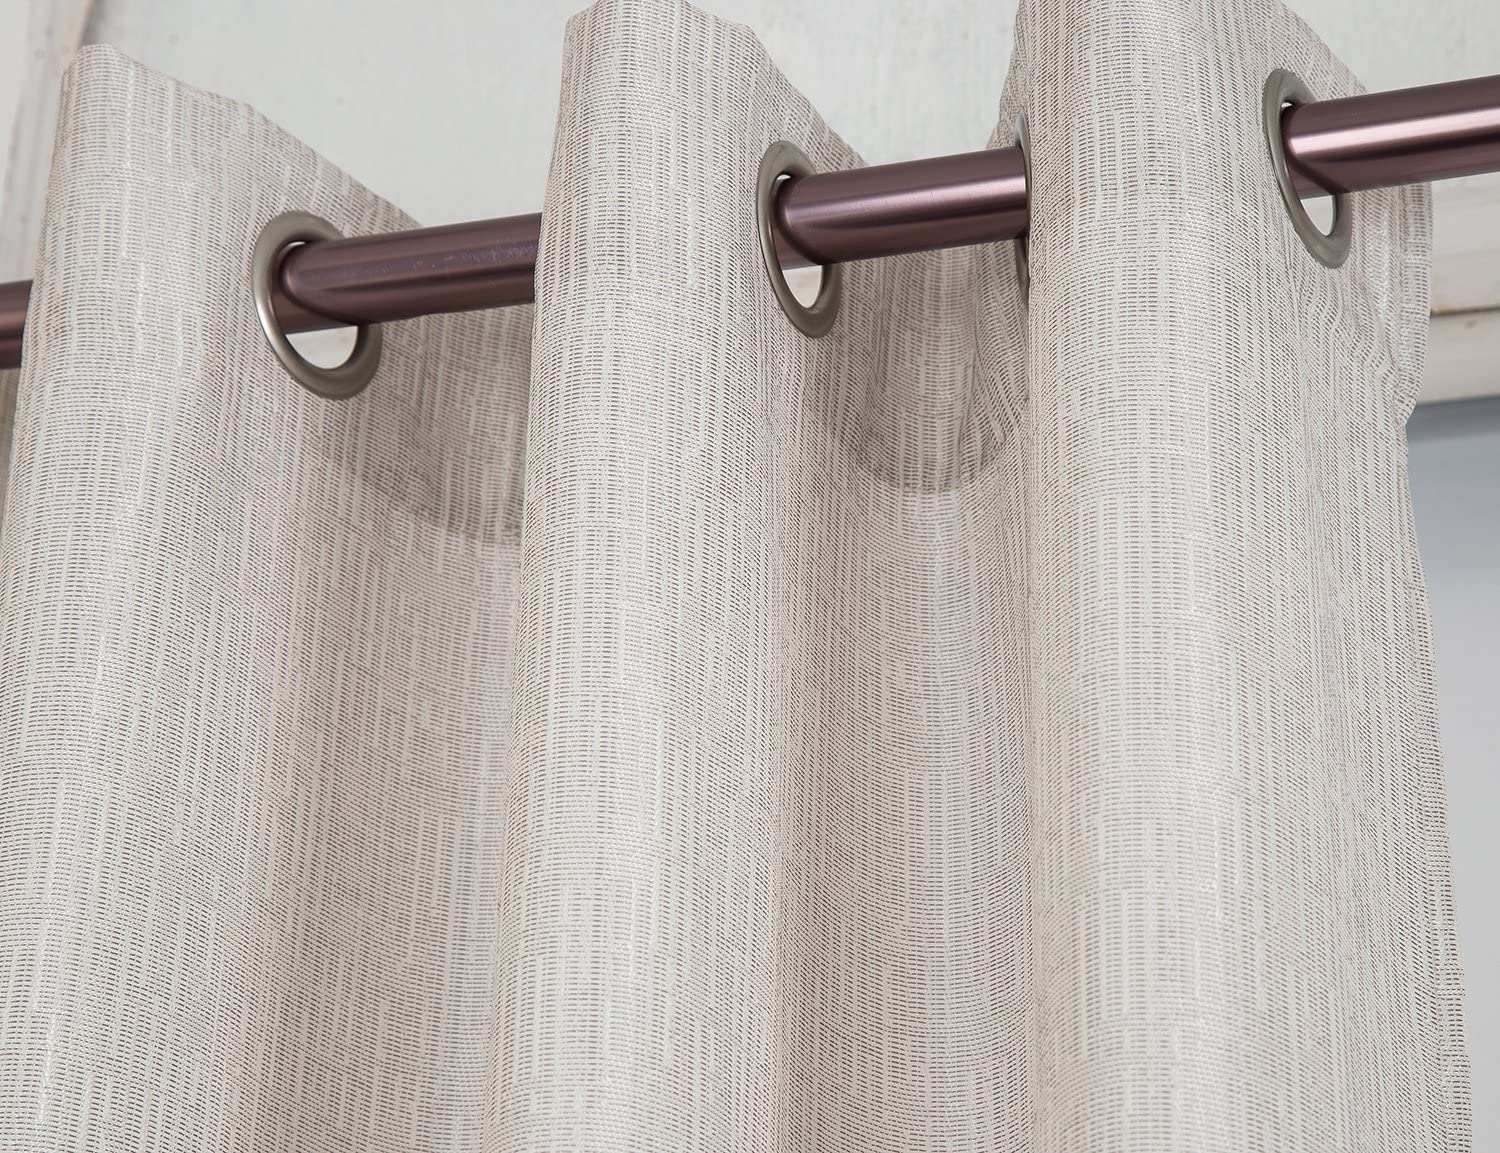 Dillon Textured 54 x 90 in. Single Grommet Curtain Panel - Linen Universe Co.